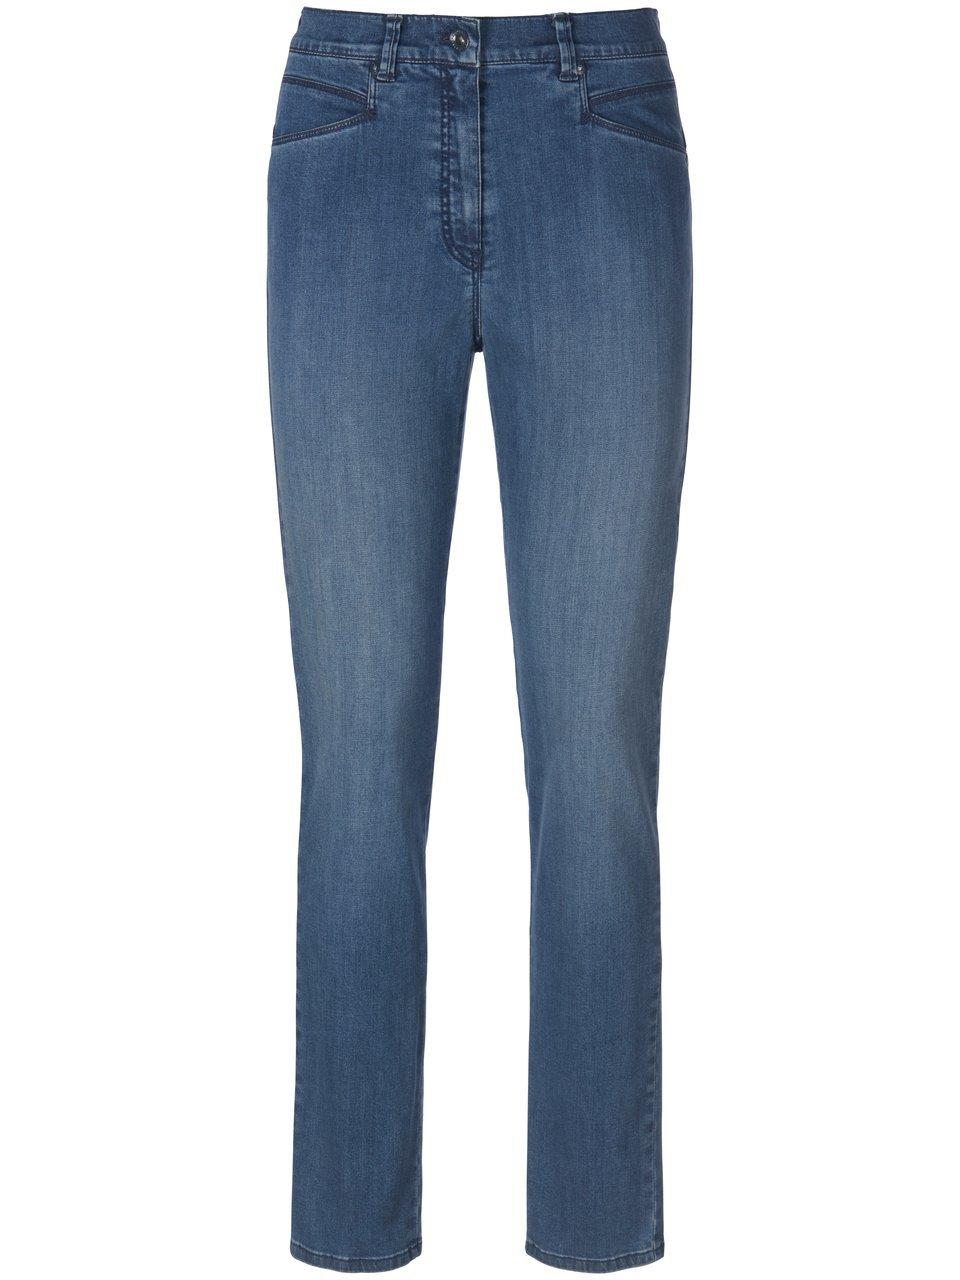 Corrigerende Comfort Plus-jeans Van Raphaela by Brax denim